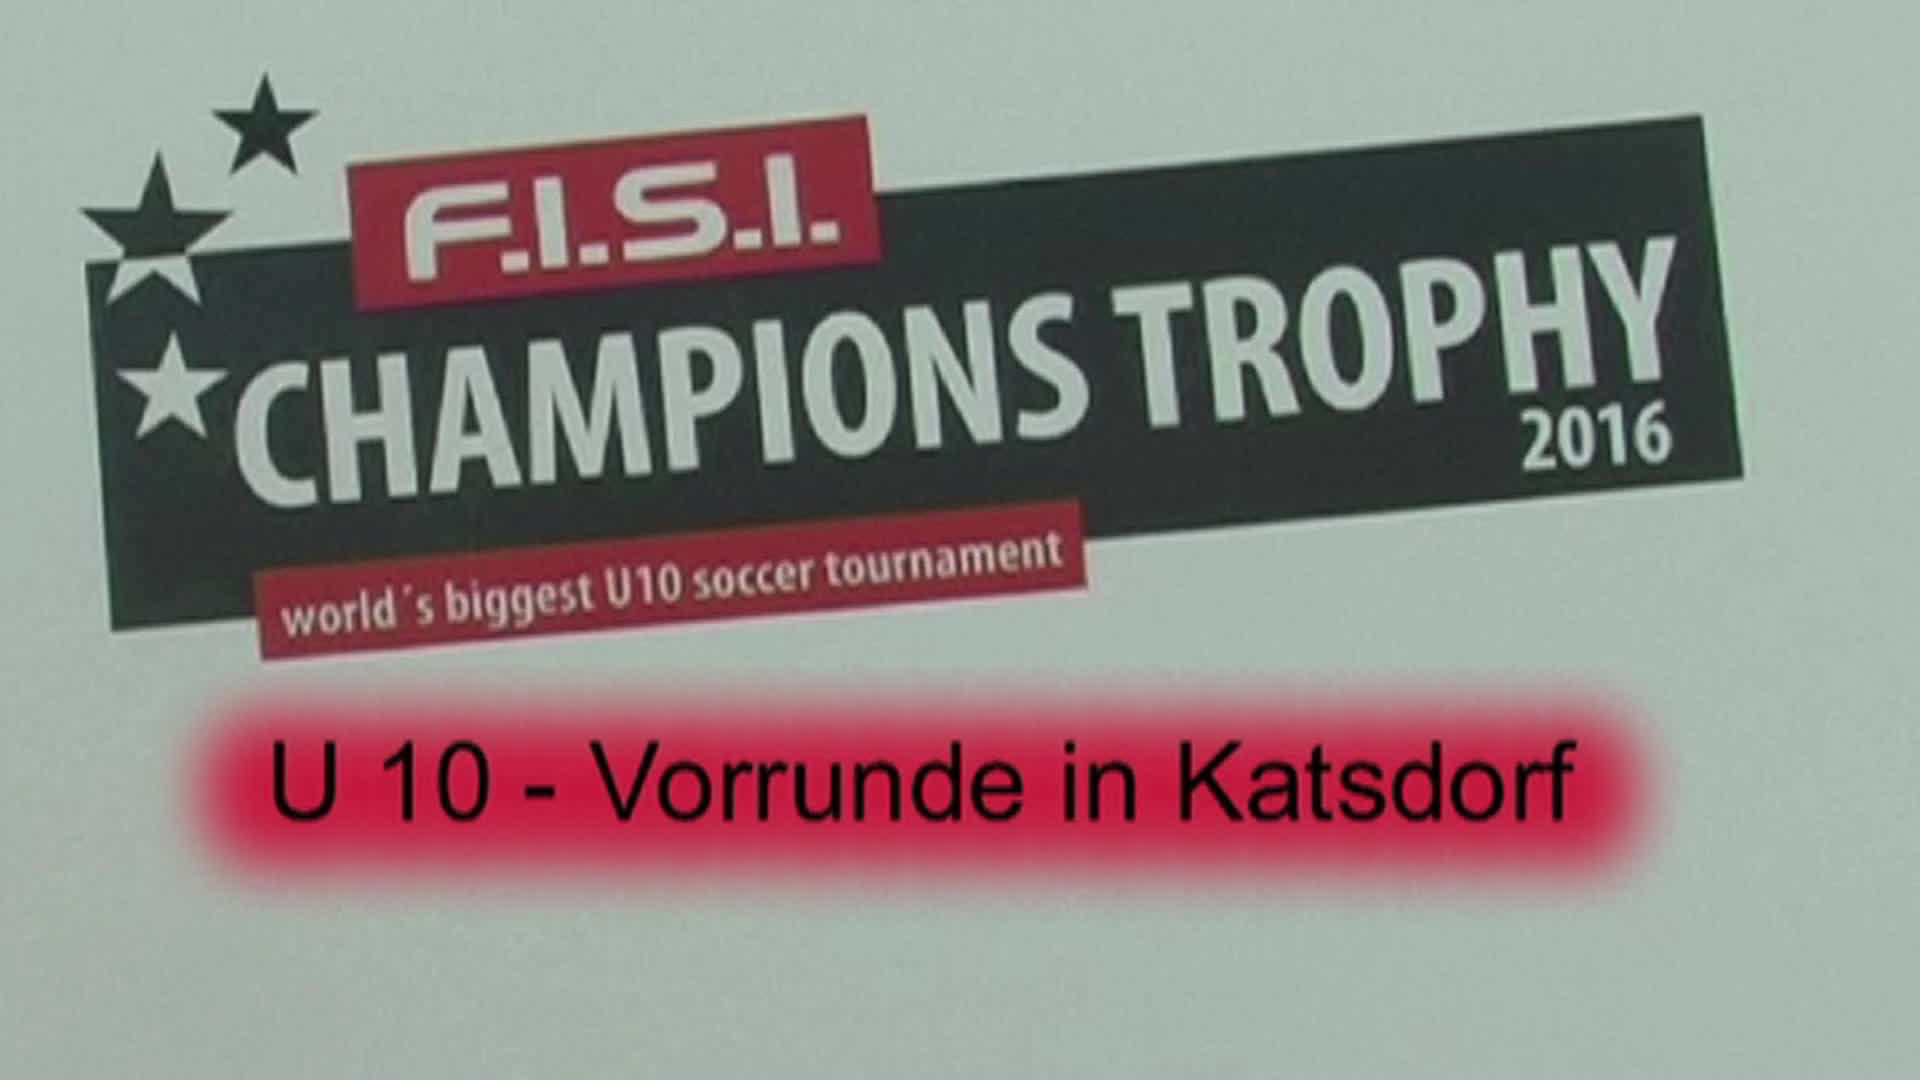 CHAMPIONS TROPHY U10 Vorrunde in Katsdorf